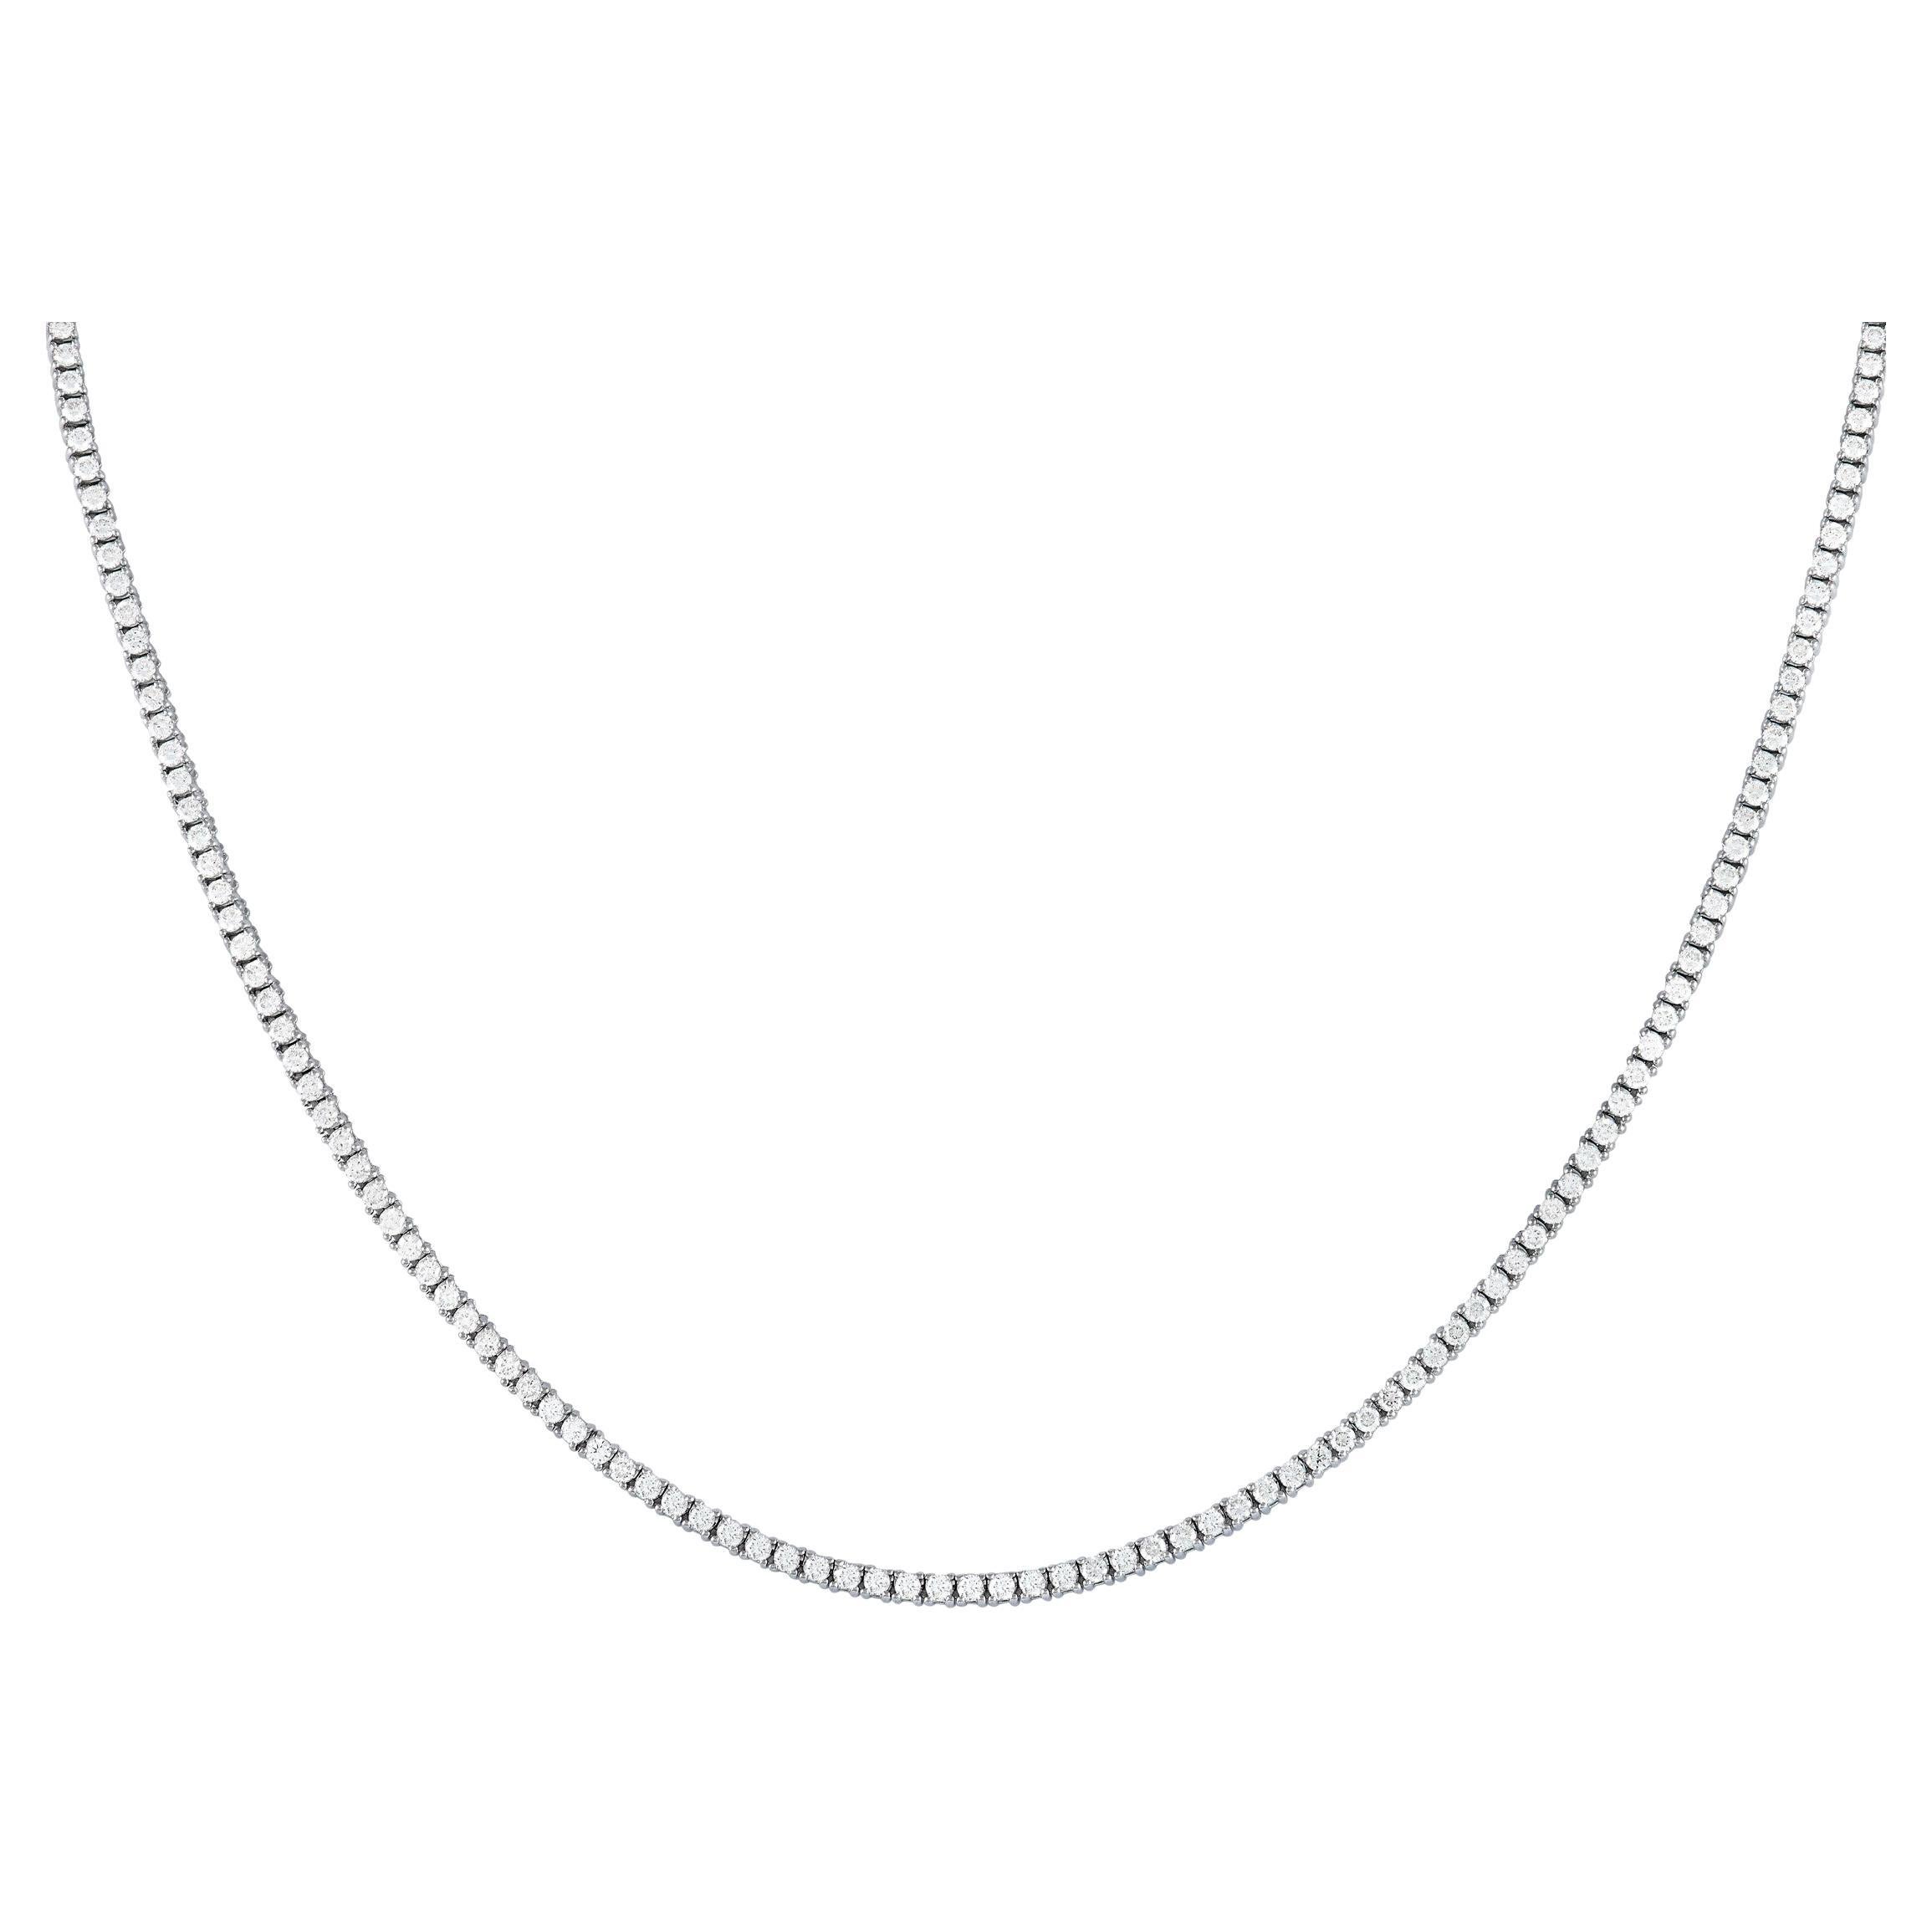 LB Exclusive 18K White Gold 4.36 Ct Diamond Necklace